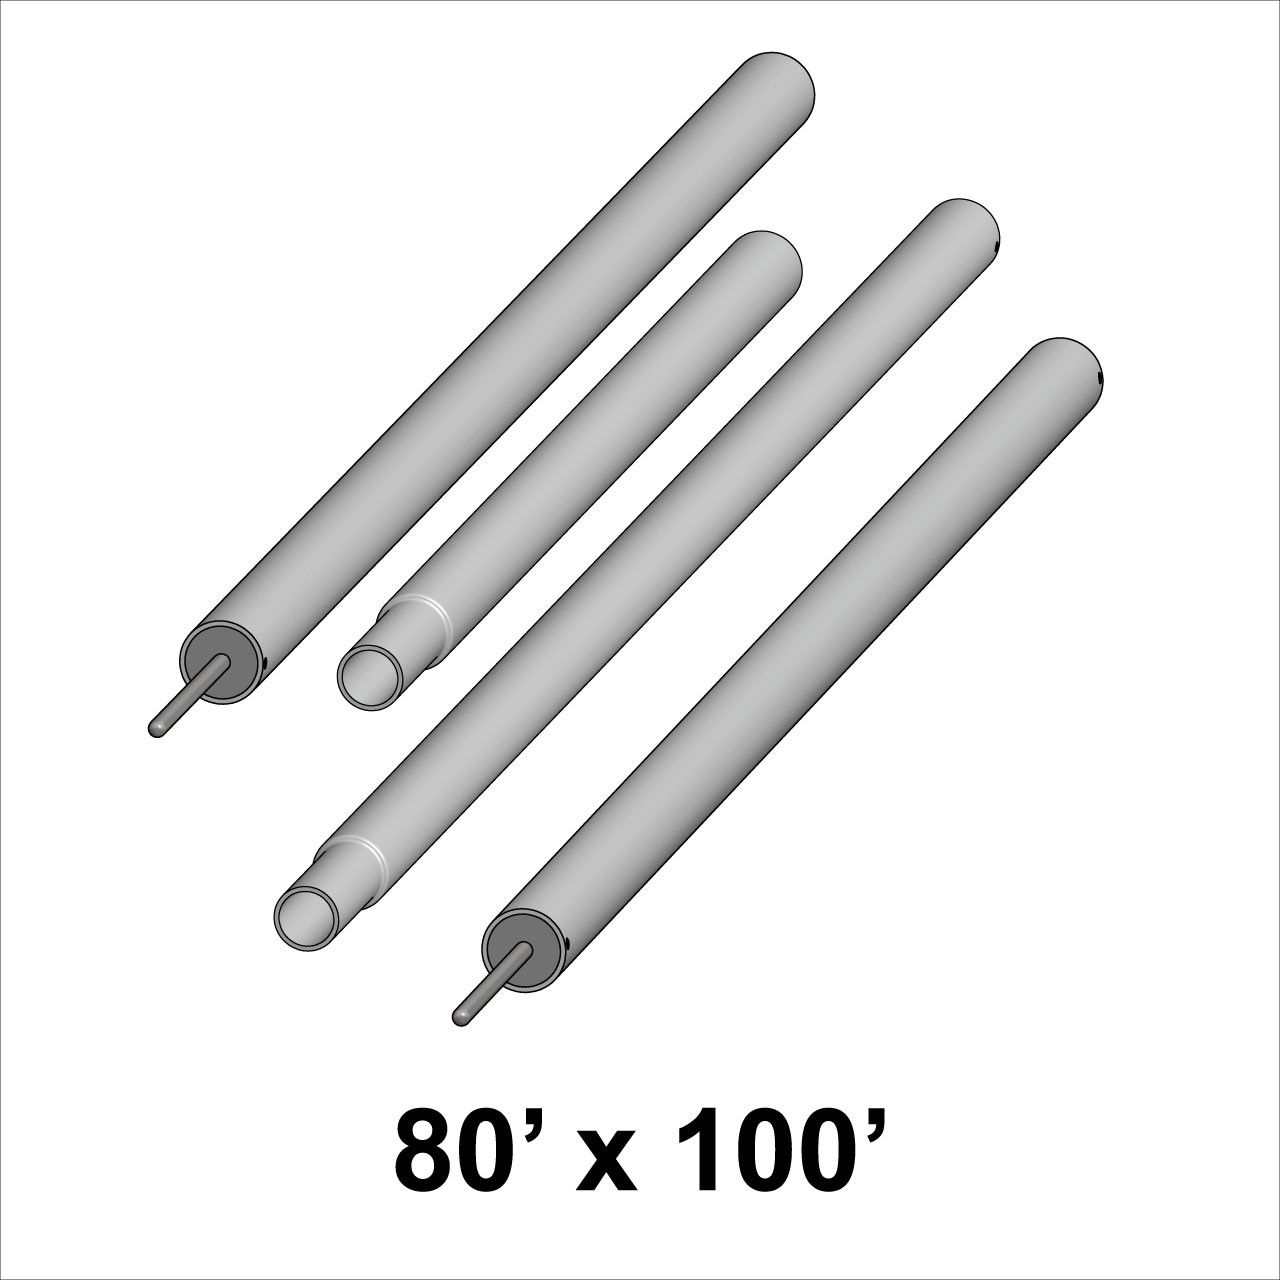 80' x 100' Classic Series Pole Kit